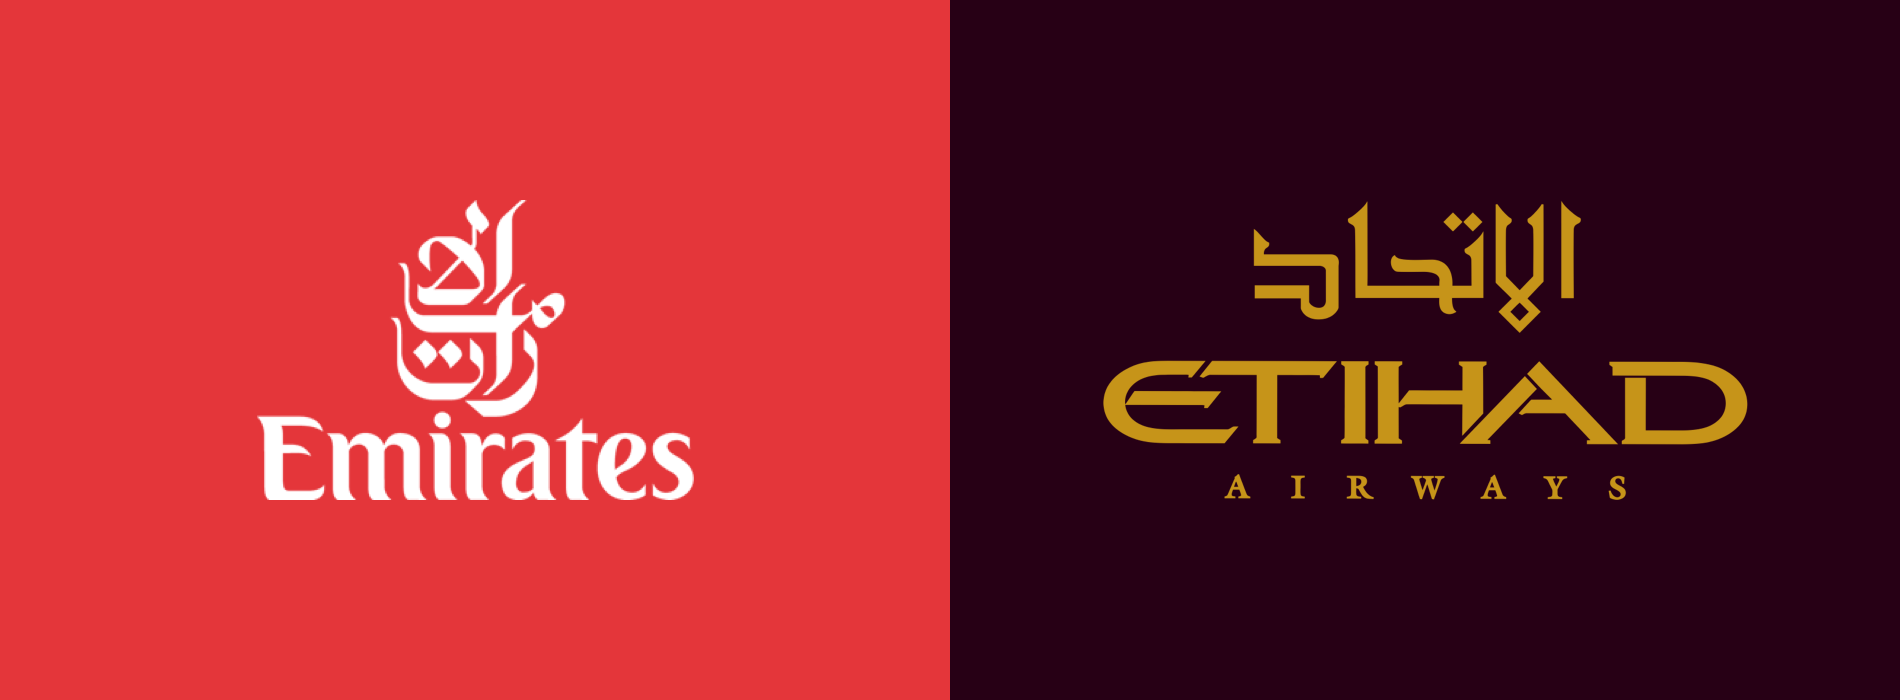 Emirates vs Etihad: A Booking Process Comparison